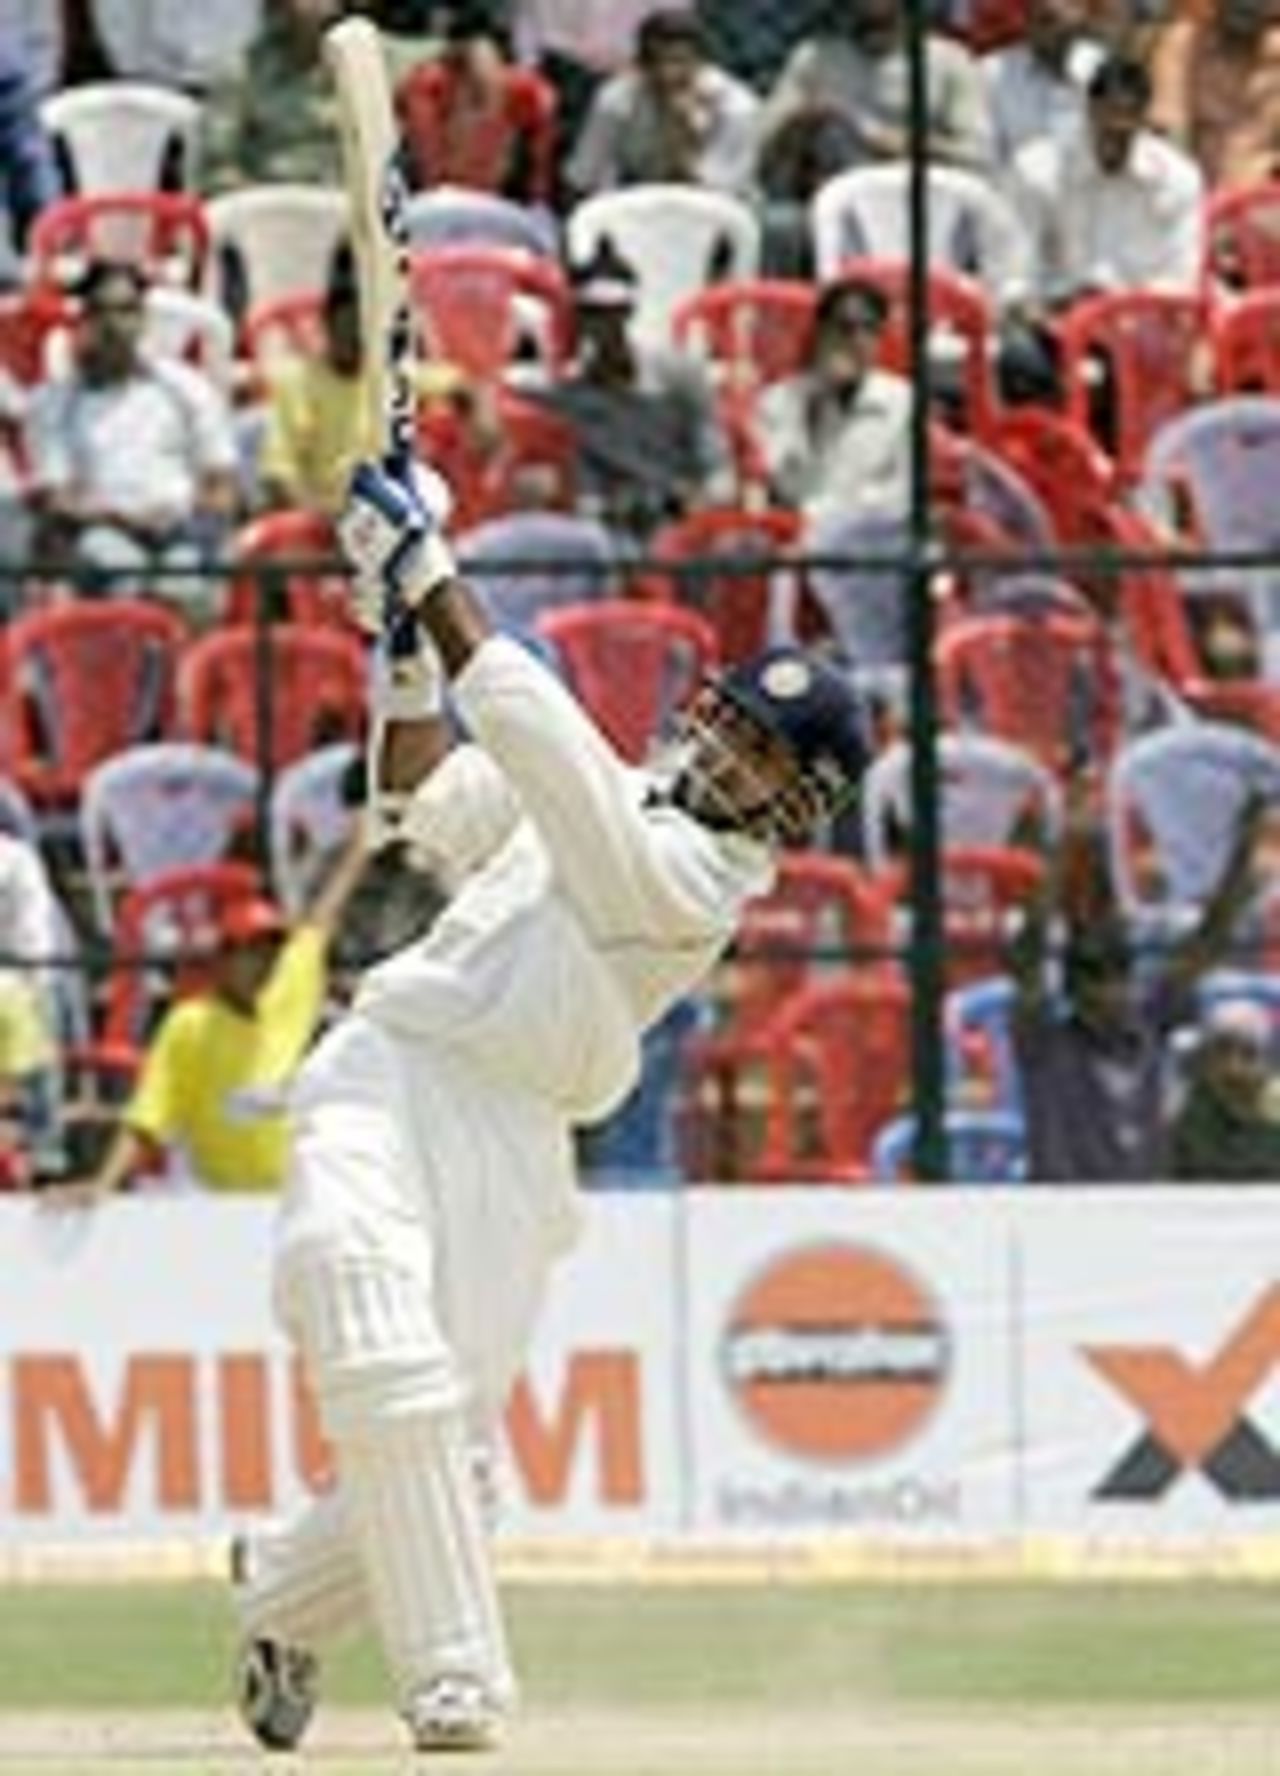 Gautam Gambhir pulls for a four, India v Pakistan, 3rd Test, Bangalore, 5th day, March 28, 2005